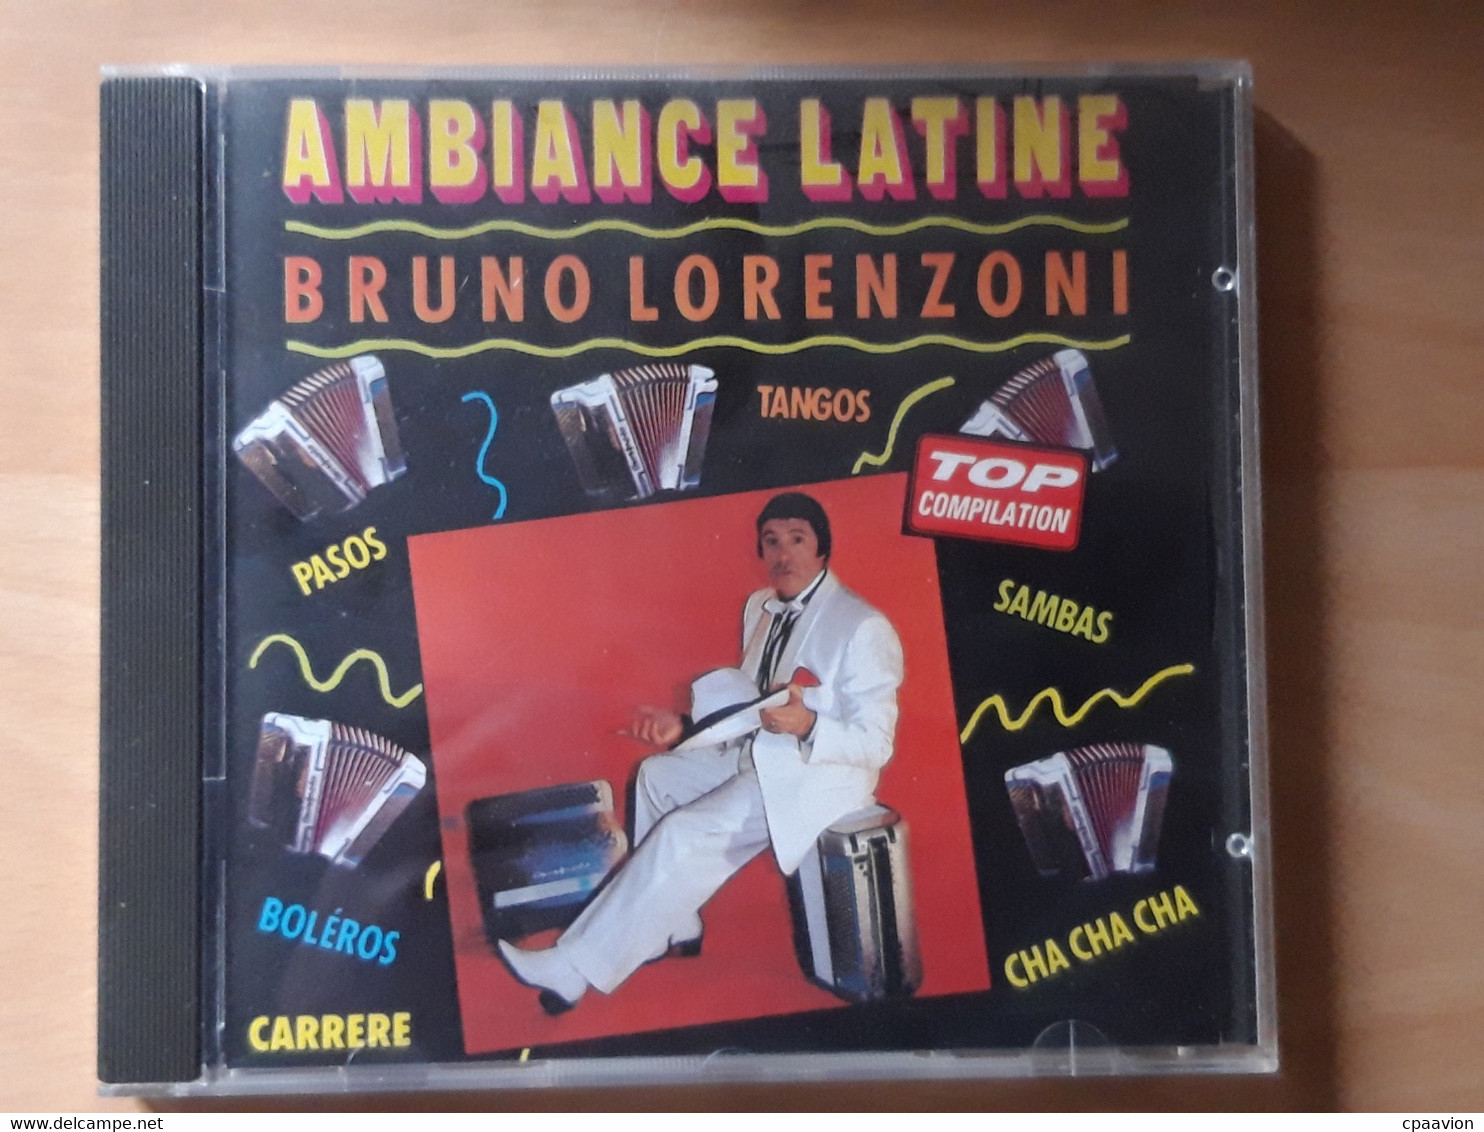 BRUNO LORENZONI; AMBIANCE LATINE - Strumentali